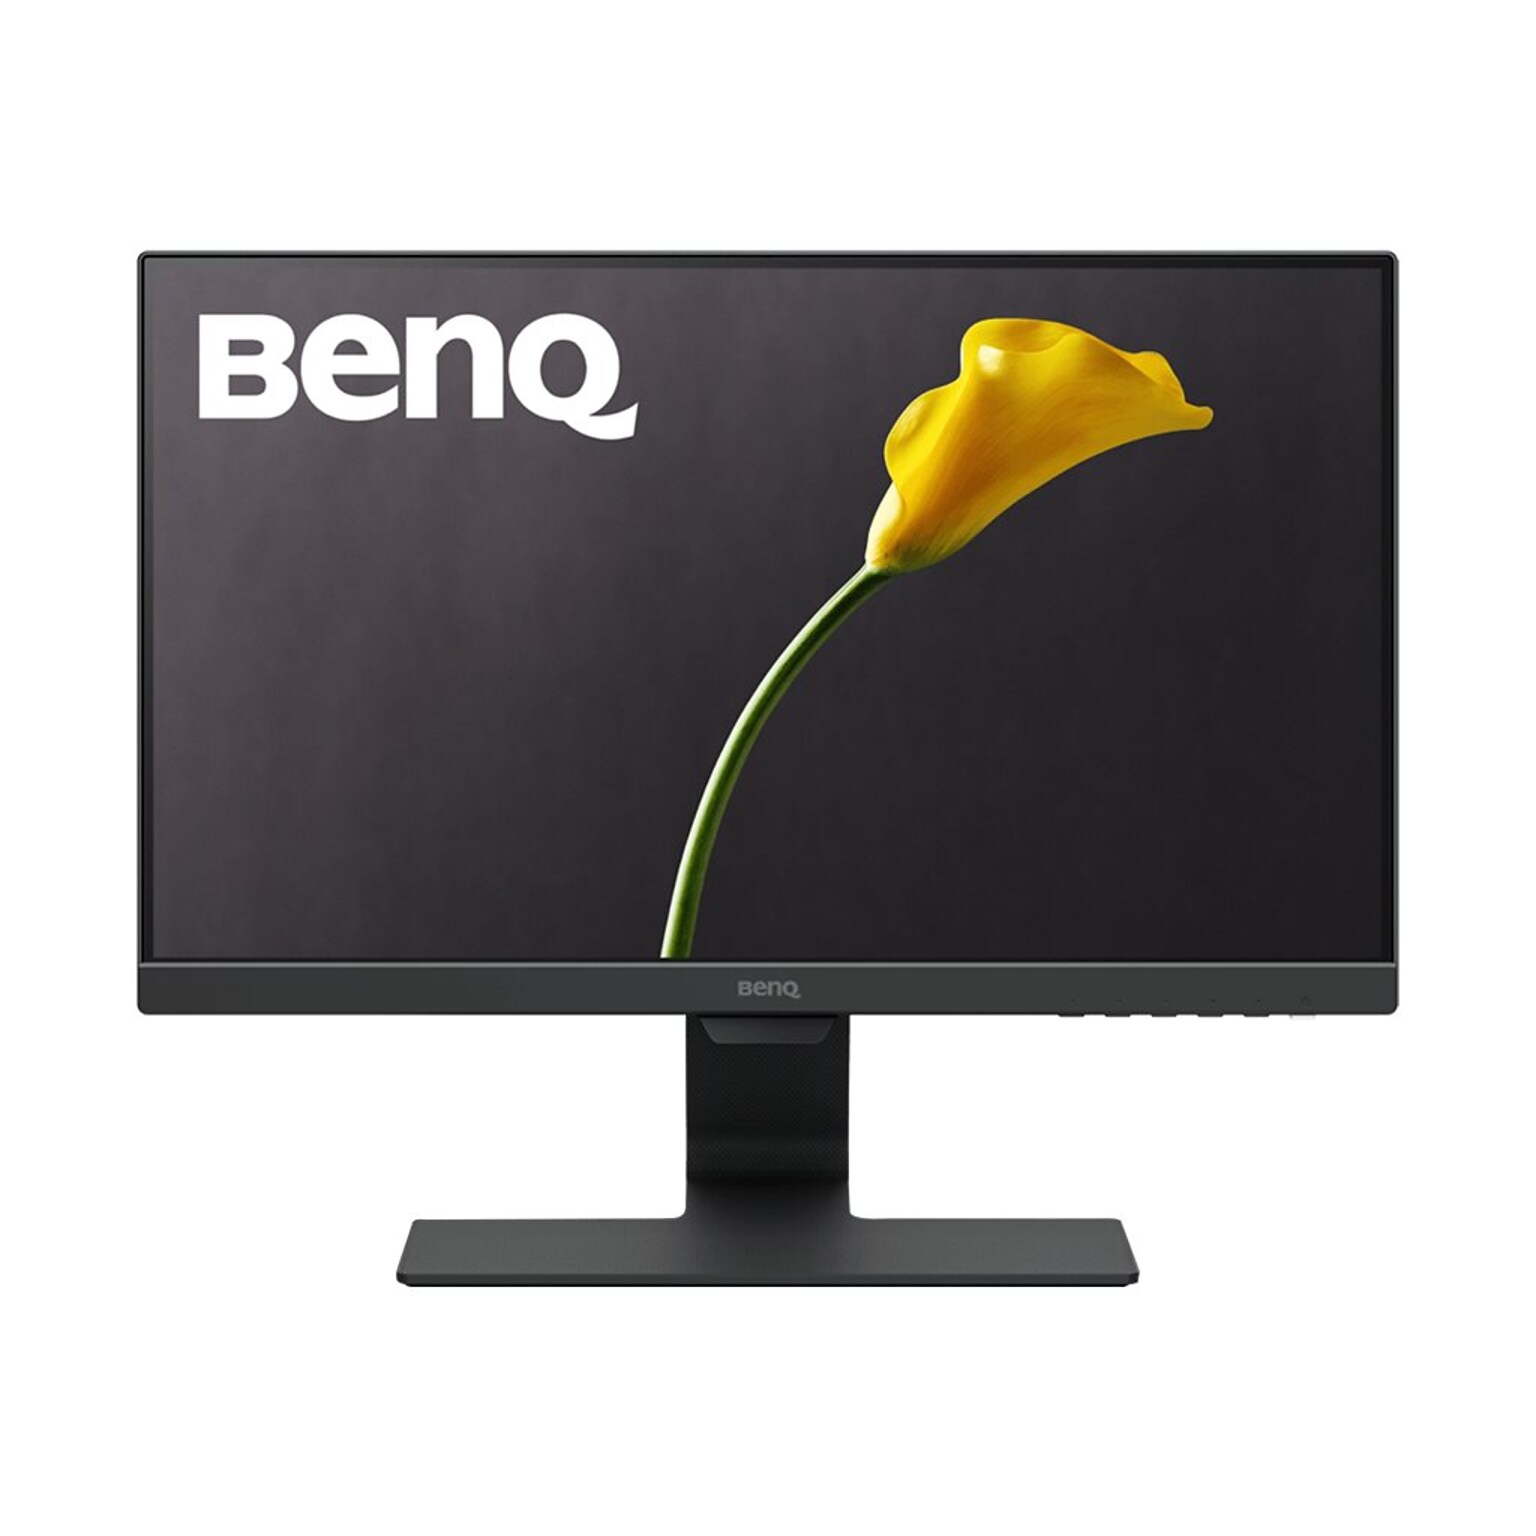 BenQ 21.5 LED Monitor, Black (GW2283)